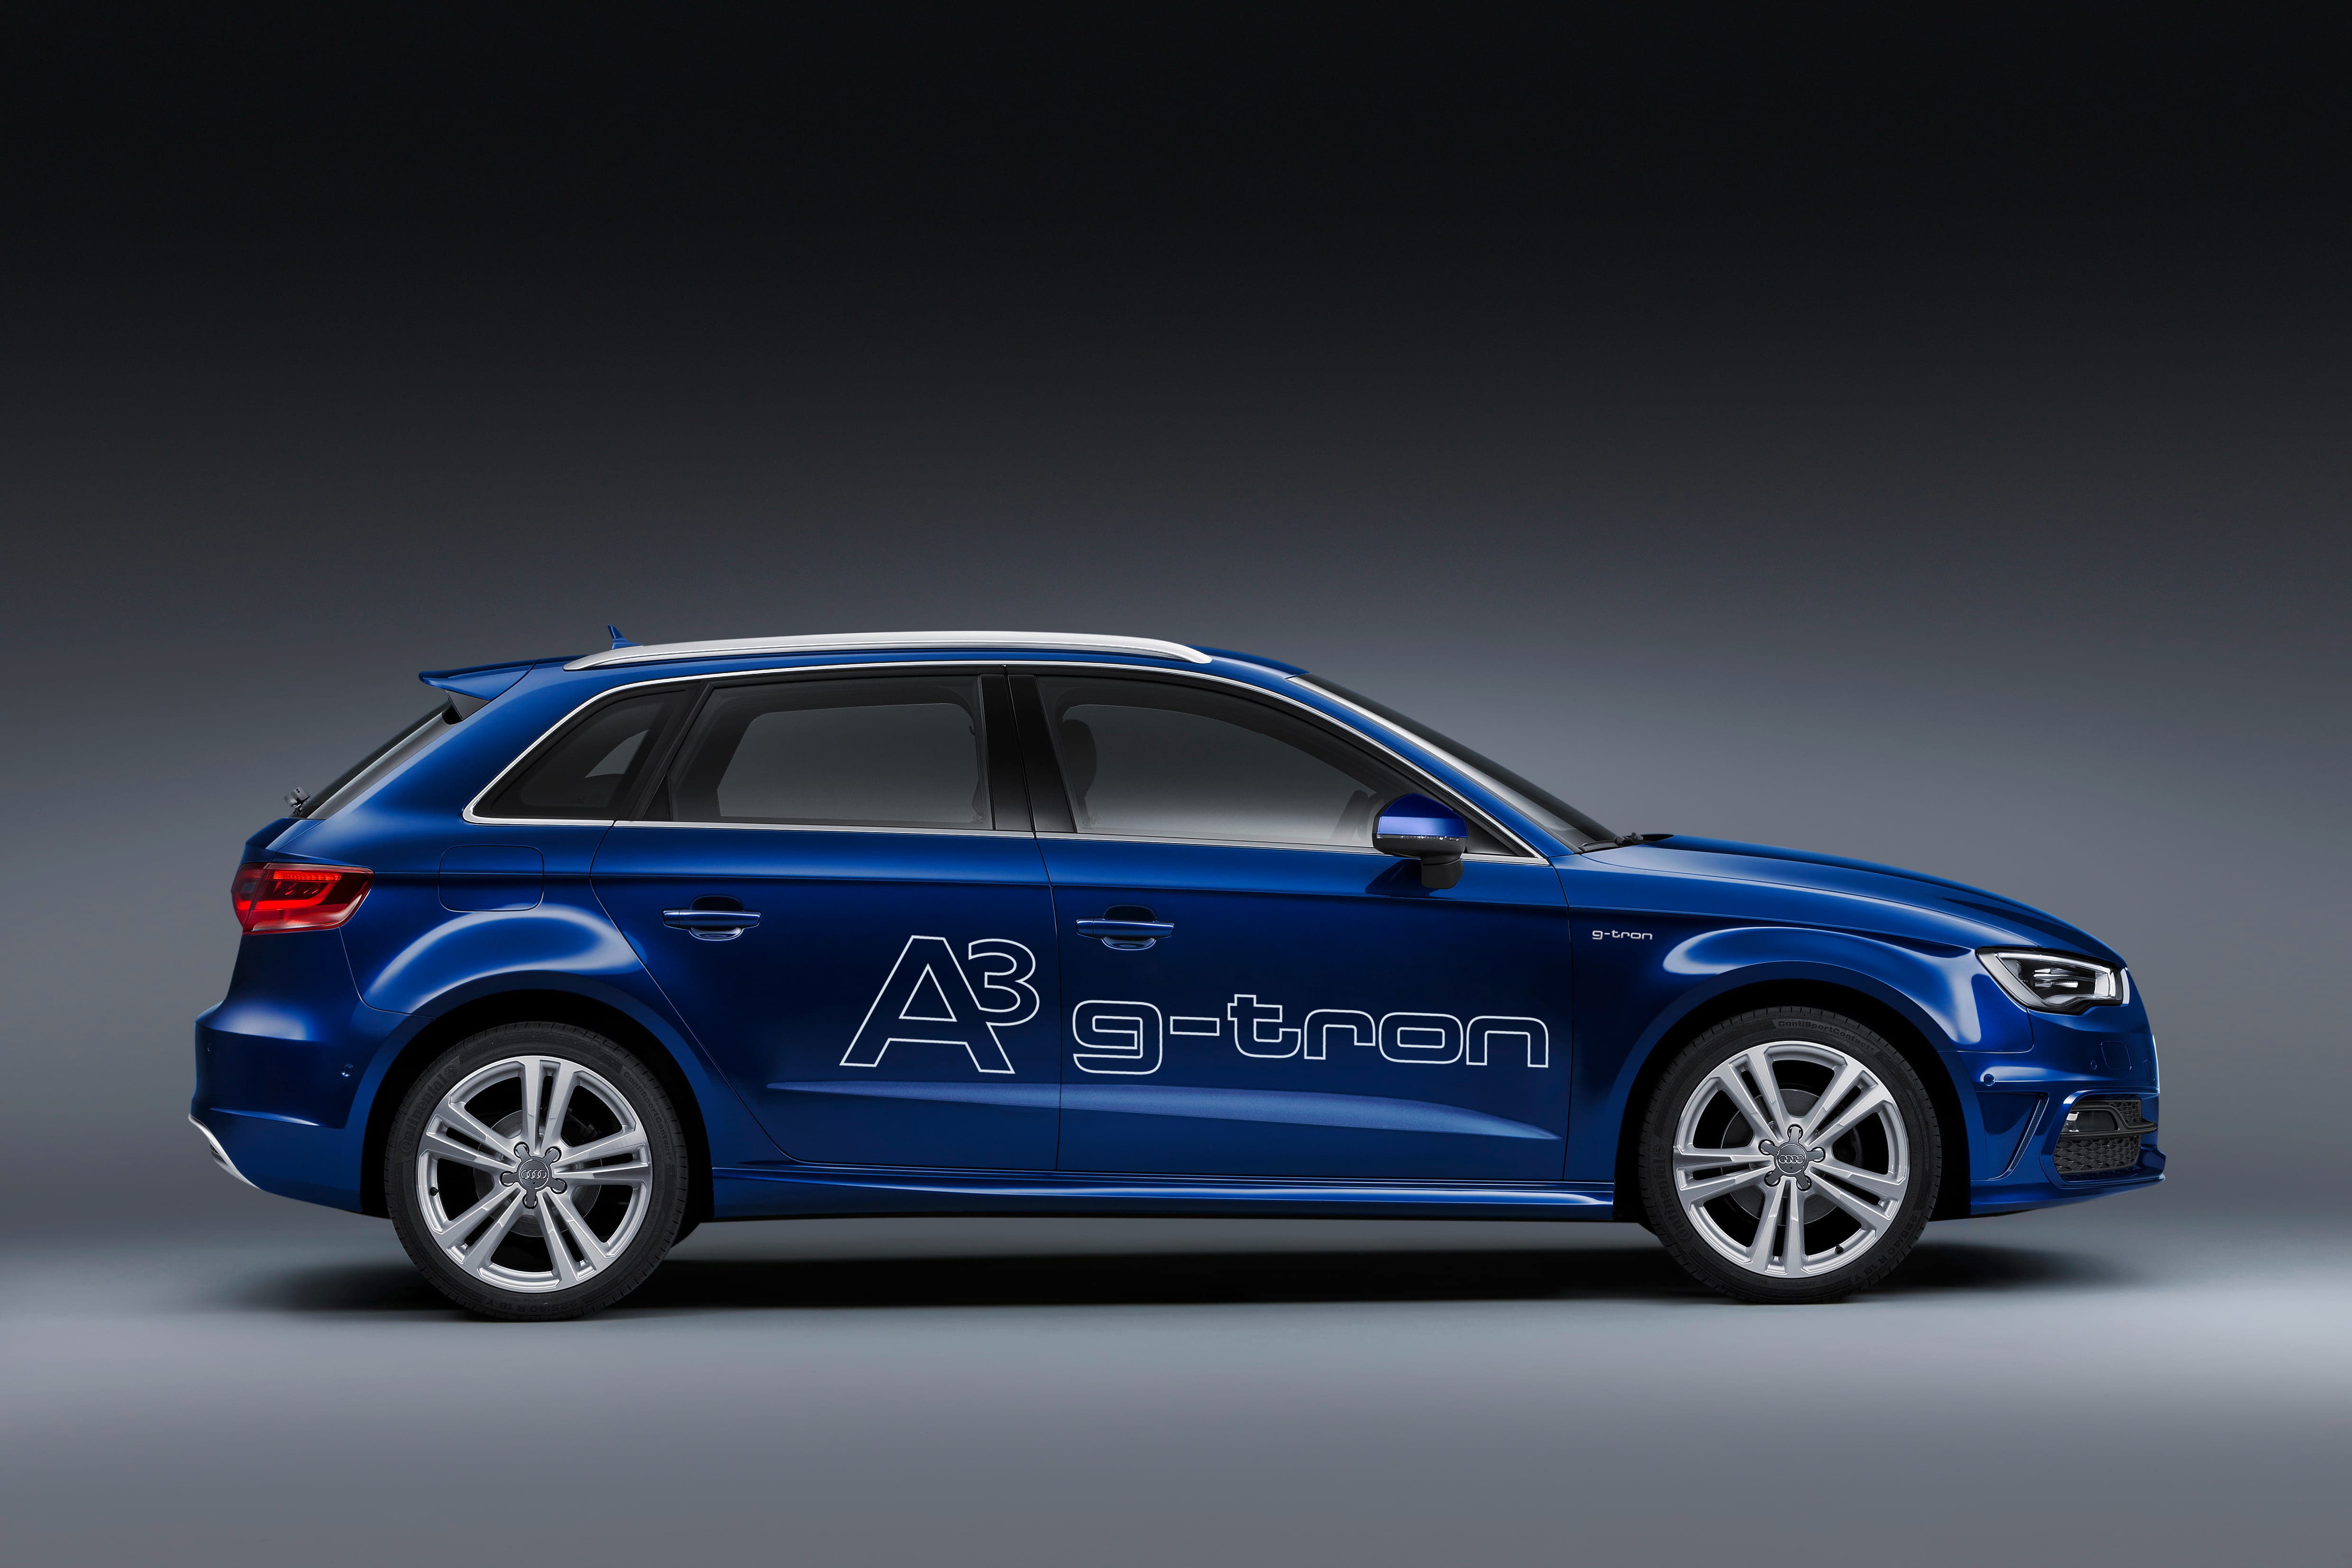 Audi A3 Sportback g-tron exterior model